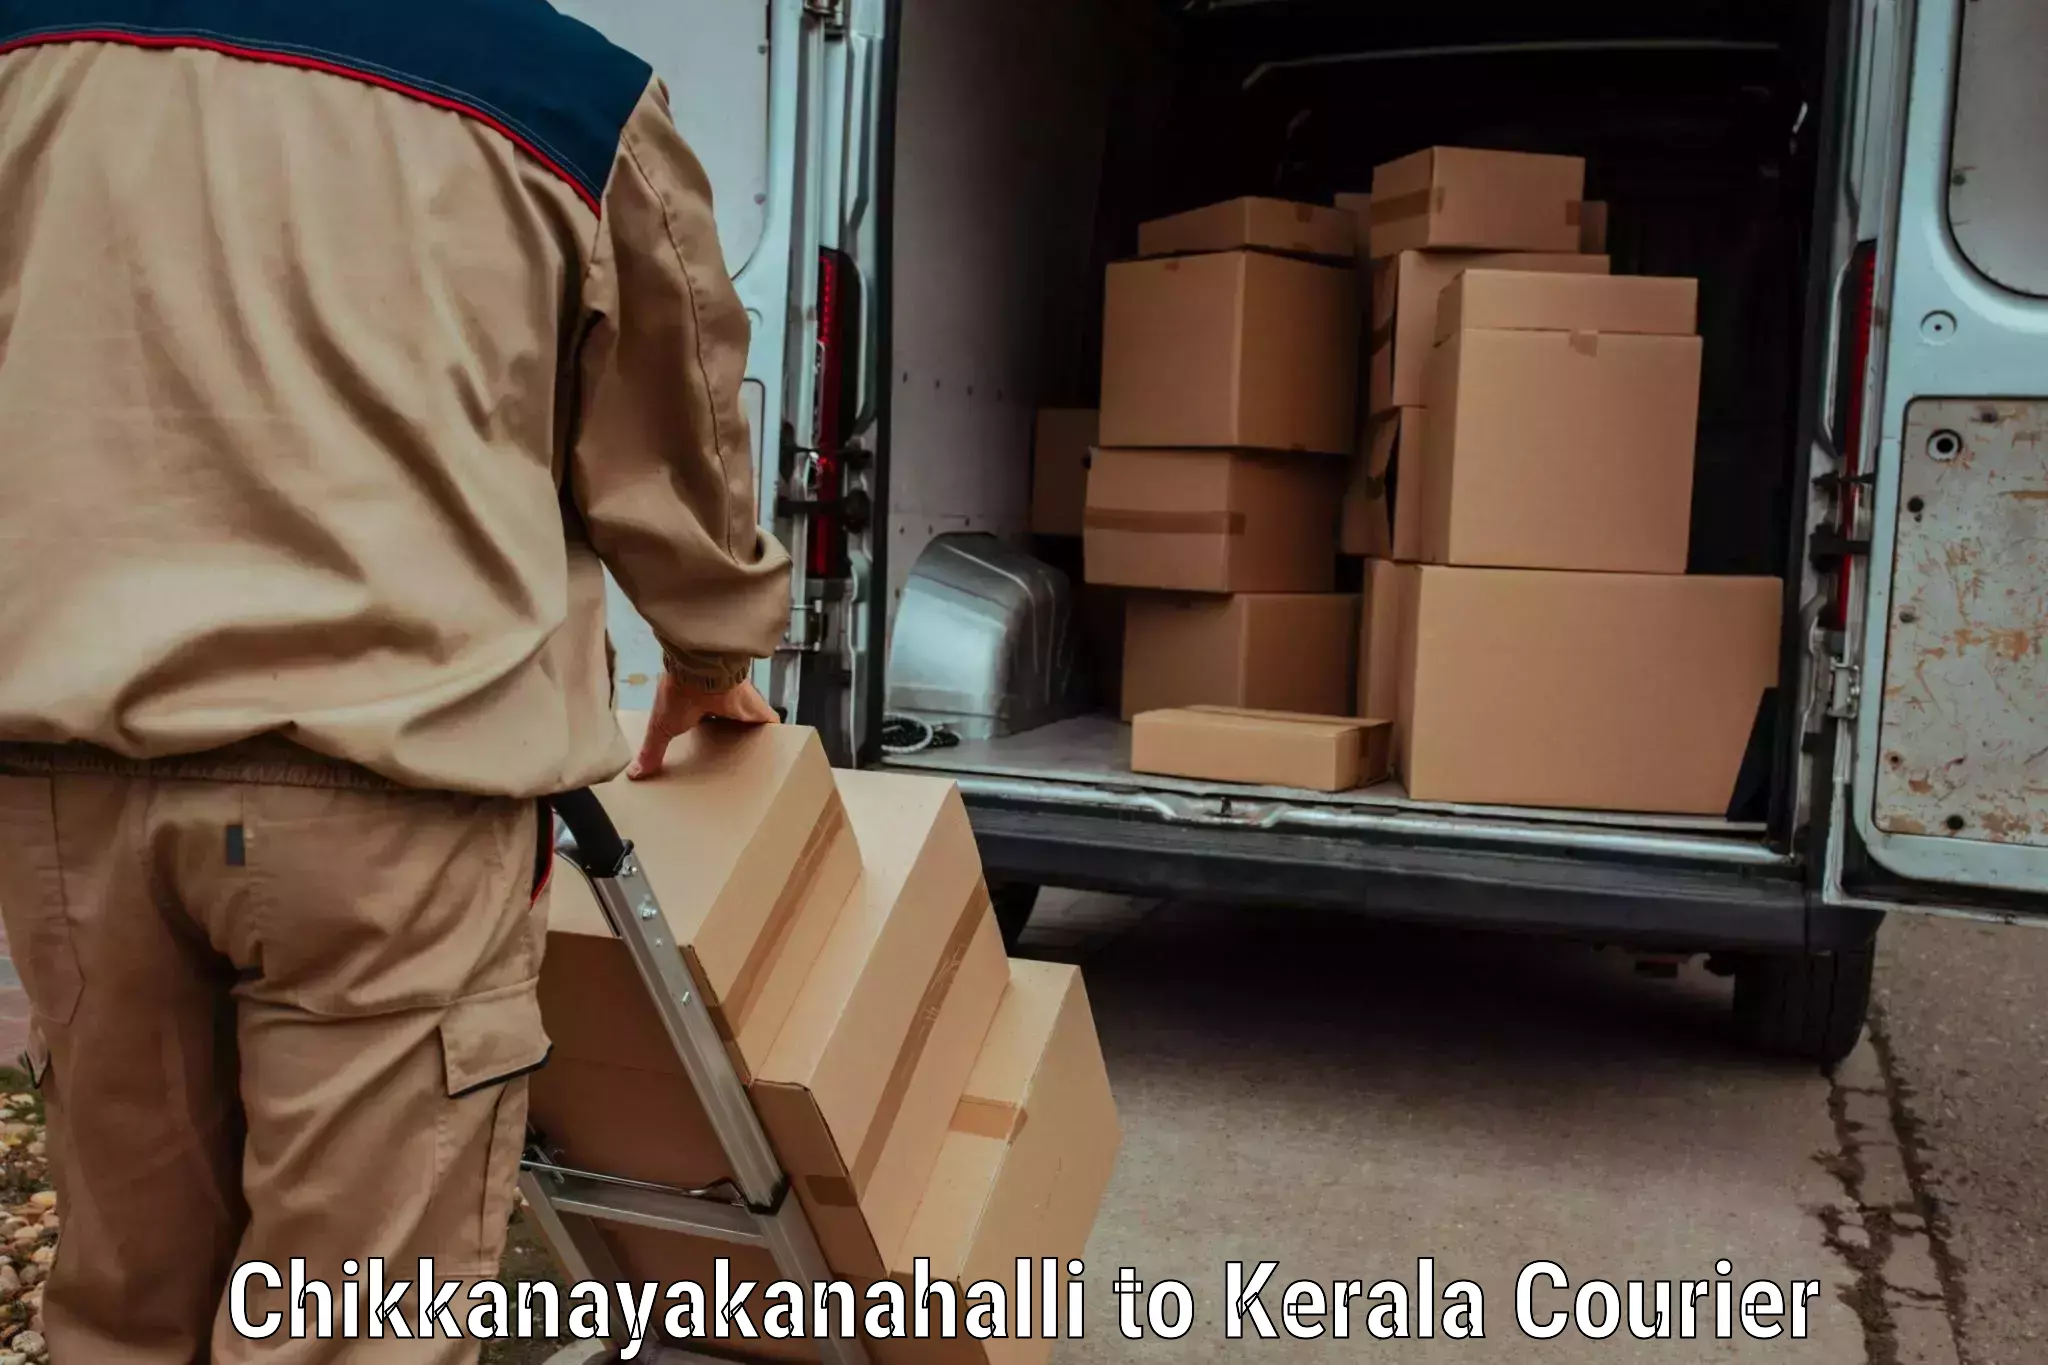 Courier service innovation Chikkanayakanahalli to Manjeshwar